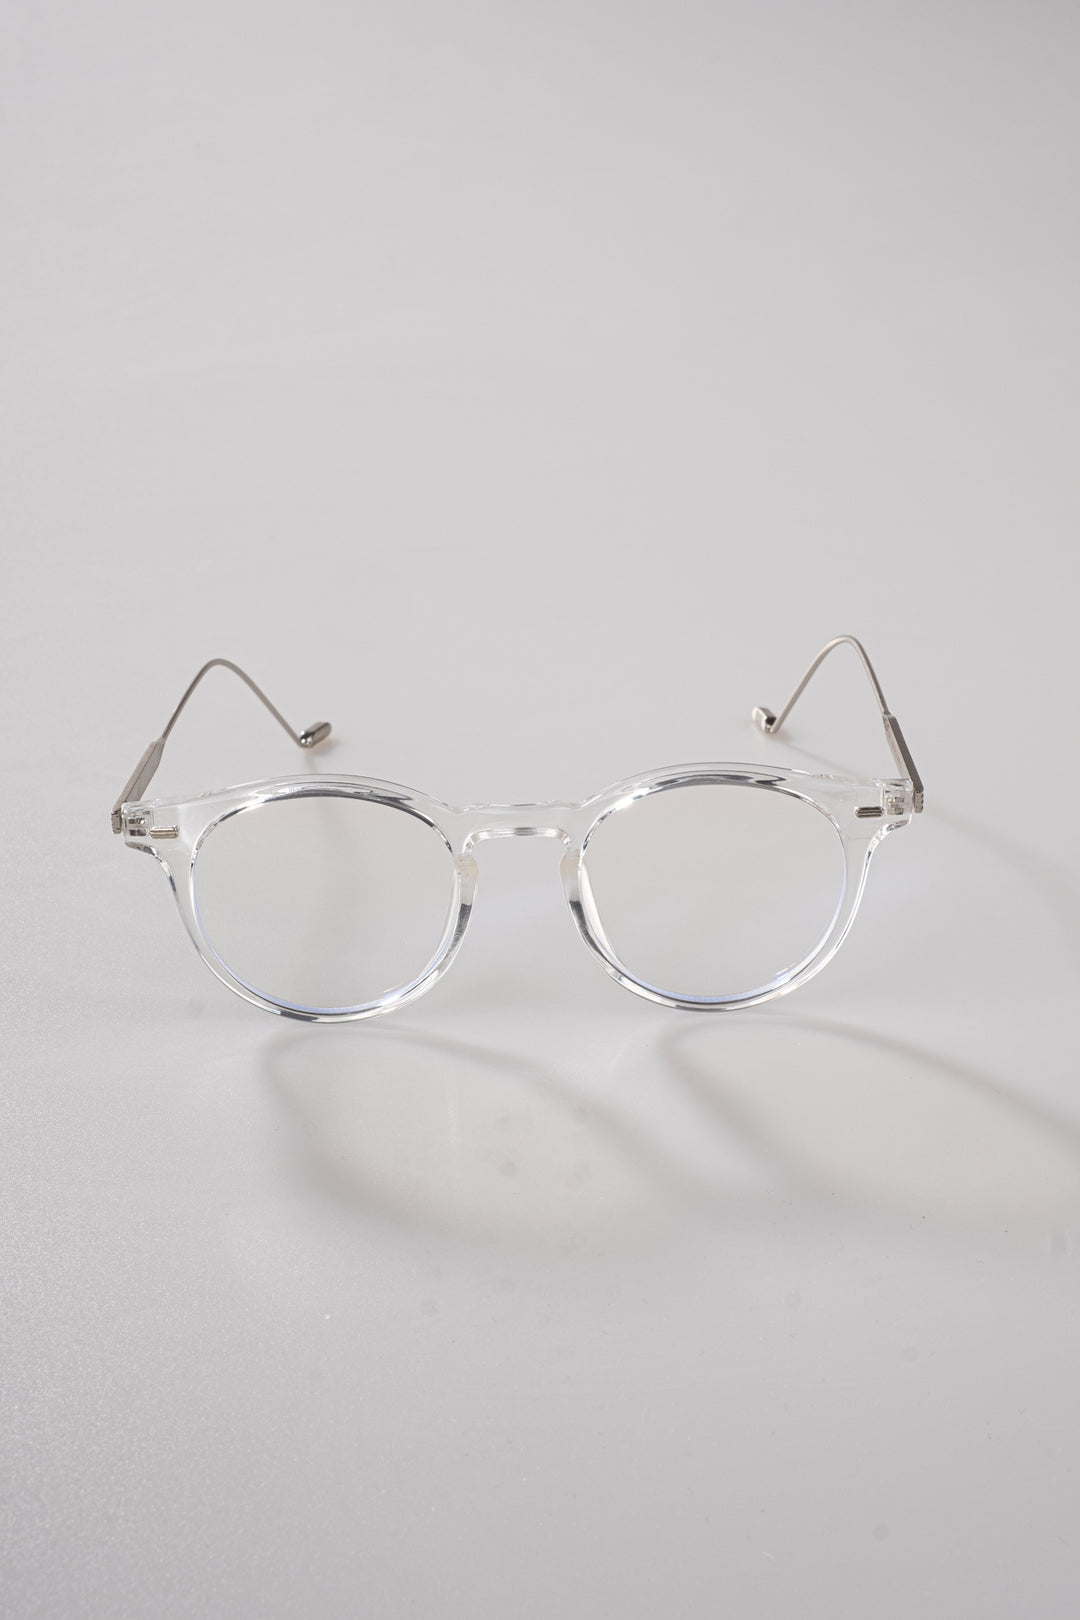 Darıo Blue Light Protection Glasses